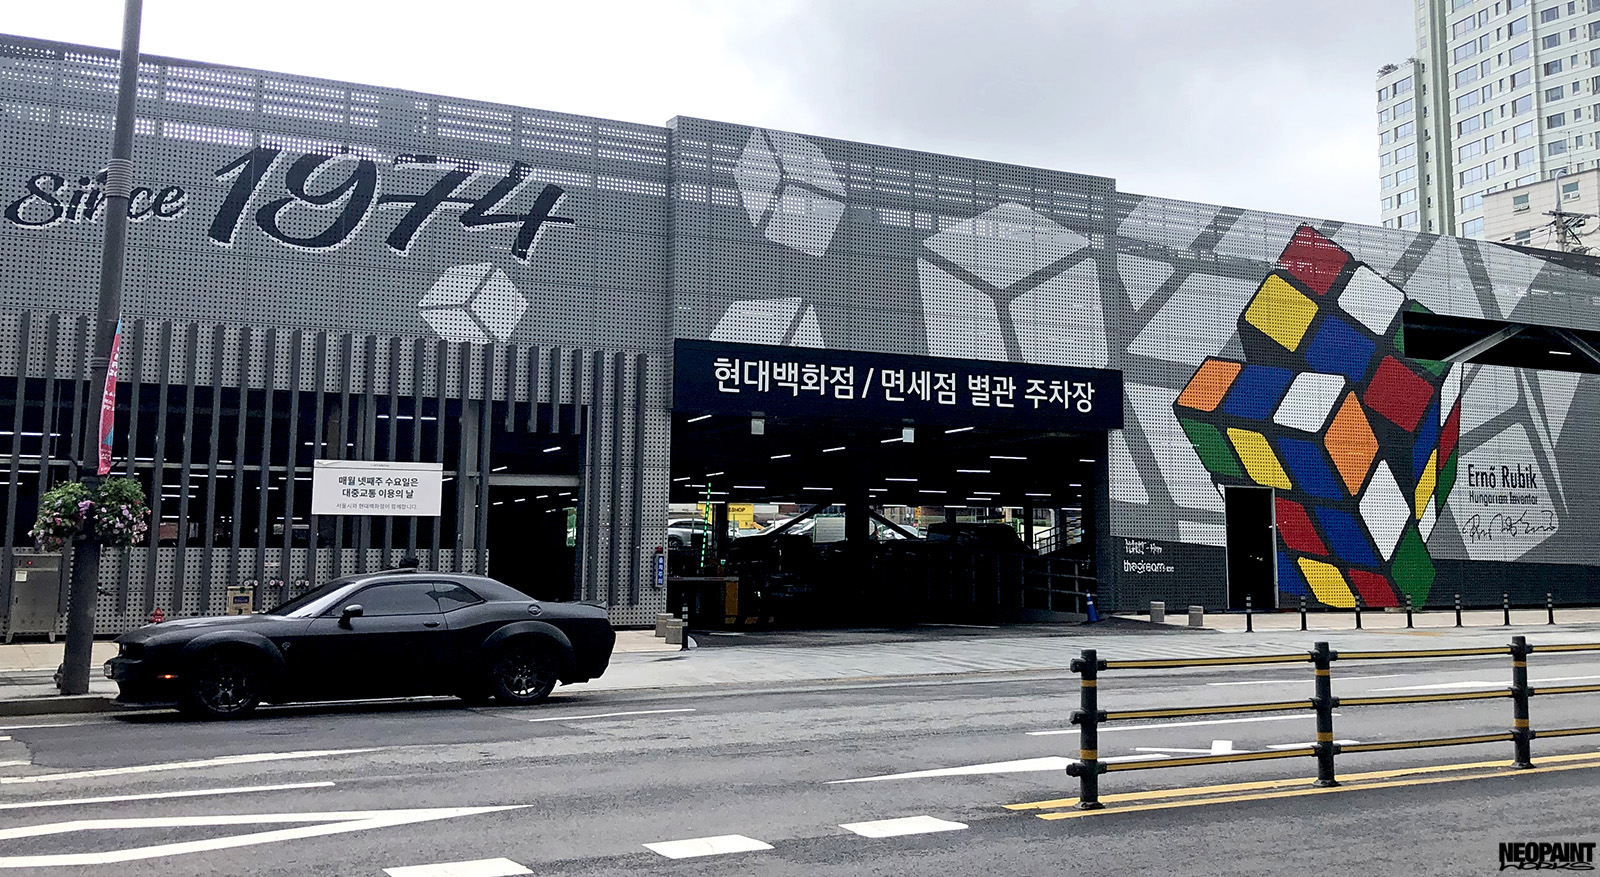 Rubik-kocka graffiti - Neopaint Works - Korea (89)